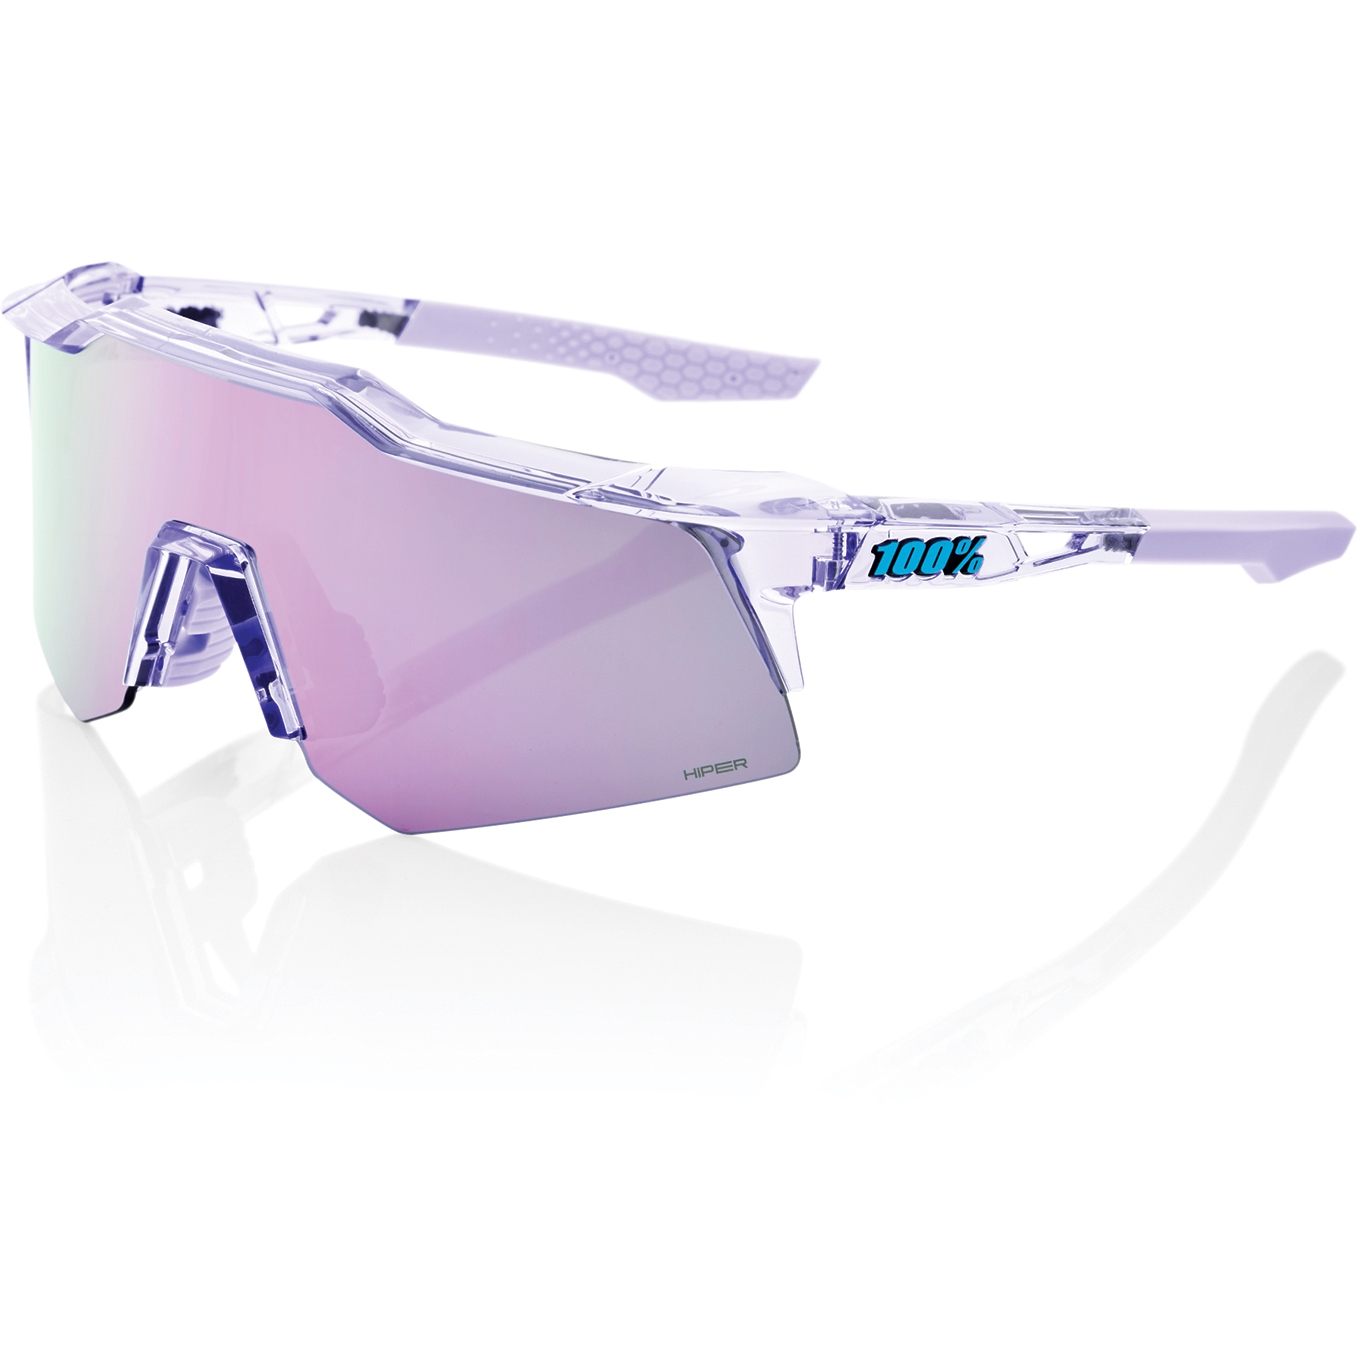 Productfoto van 100% Speedcraft XS Glasses - HiPER Mirror Lens - Polished Translucent Lavender / Lavender + Clear